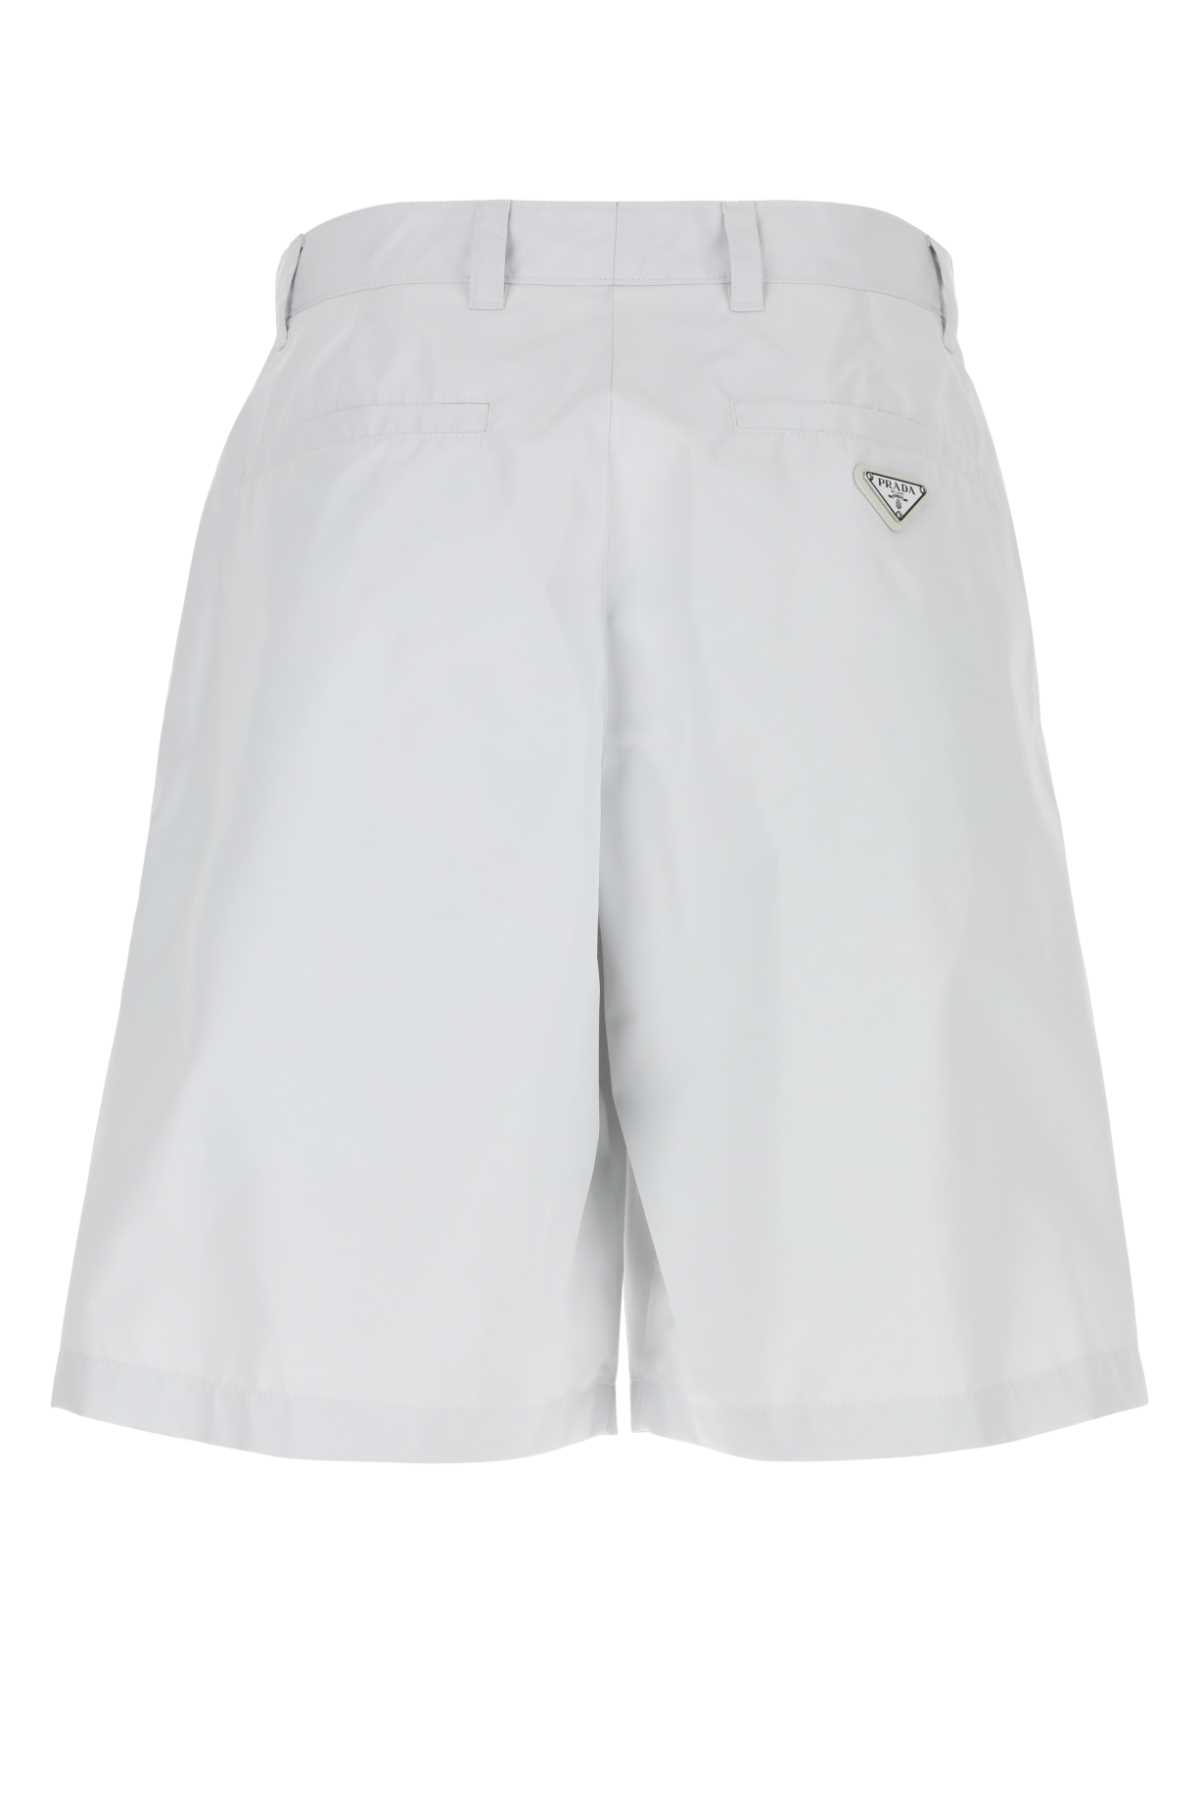 Prada White Nylon Blend Bermuda Shorts In F0009